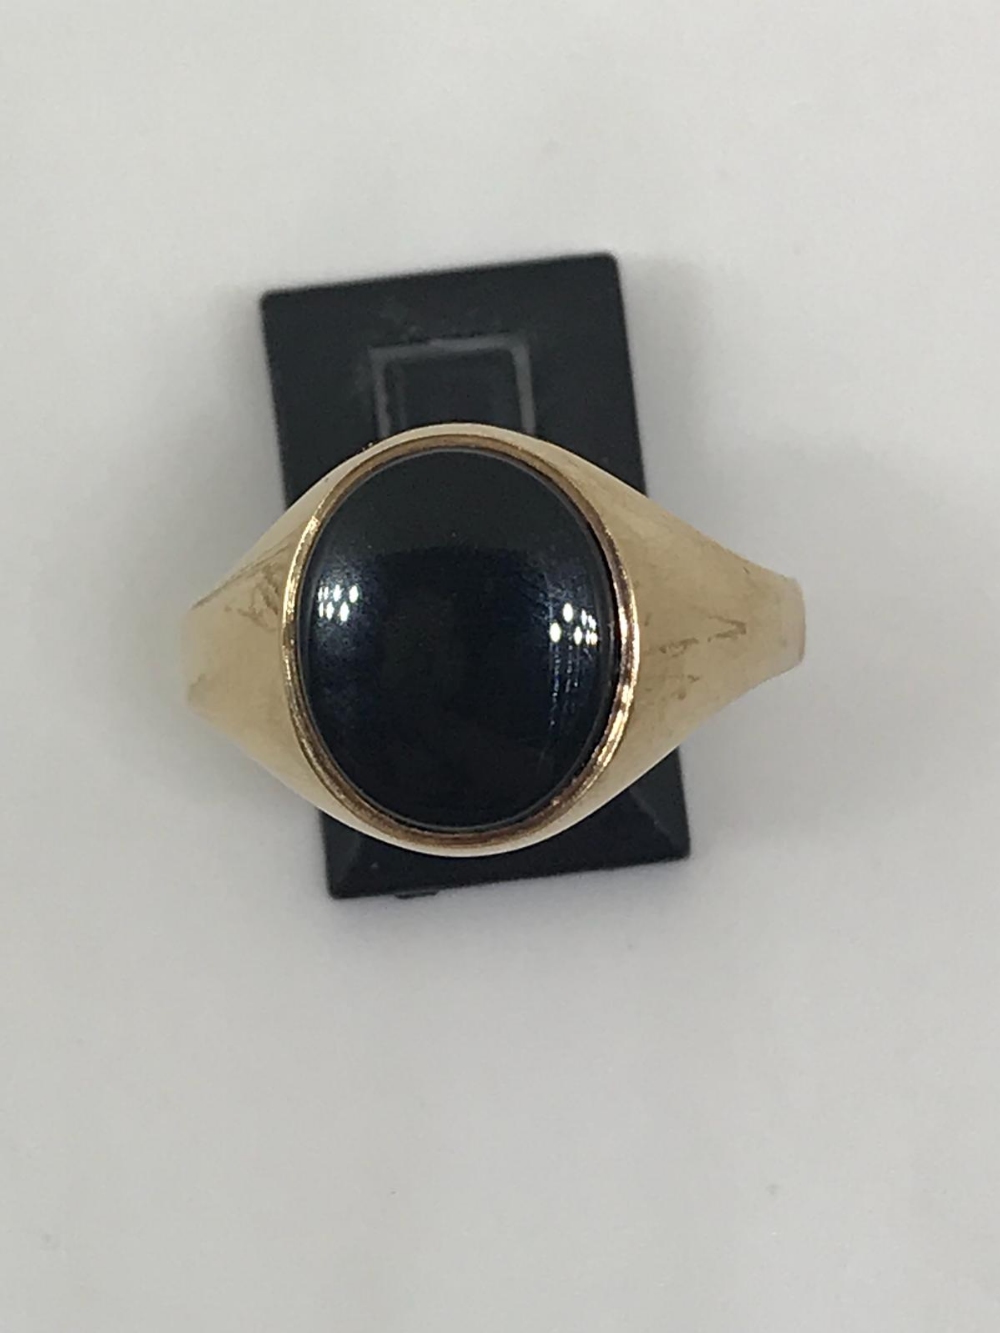 9ct gold black onyx signet ring - Image 2 of 2